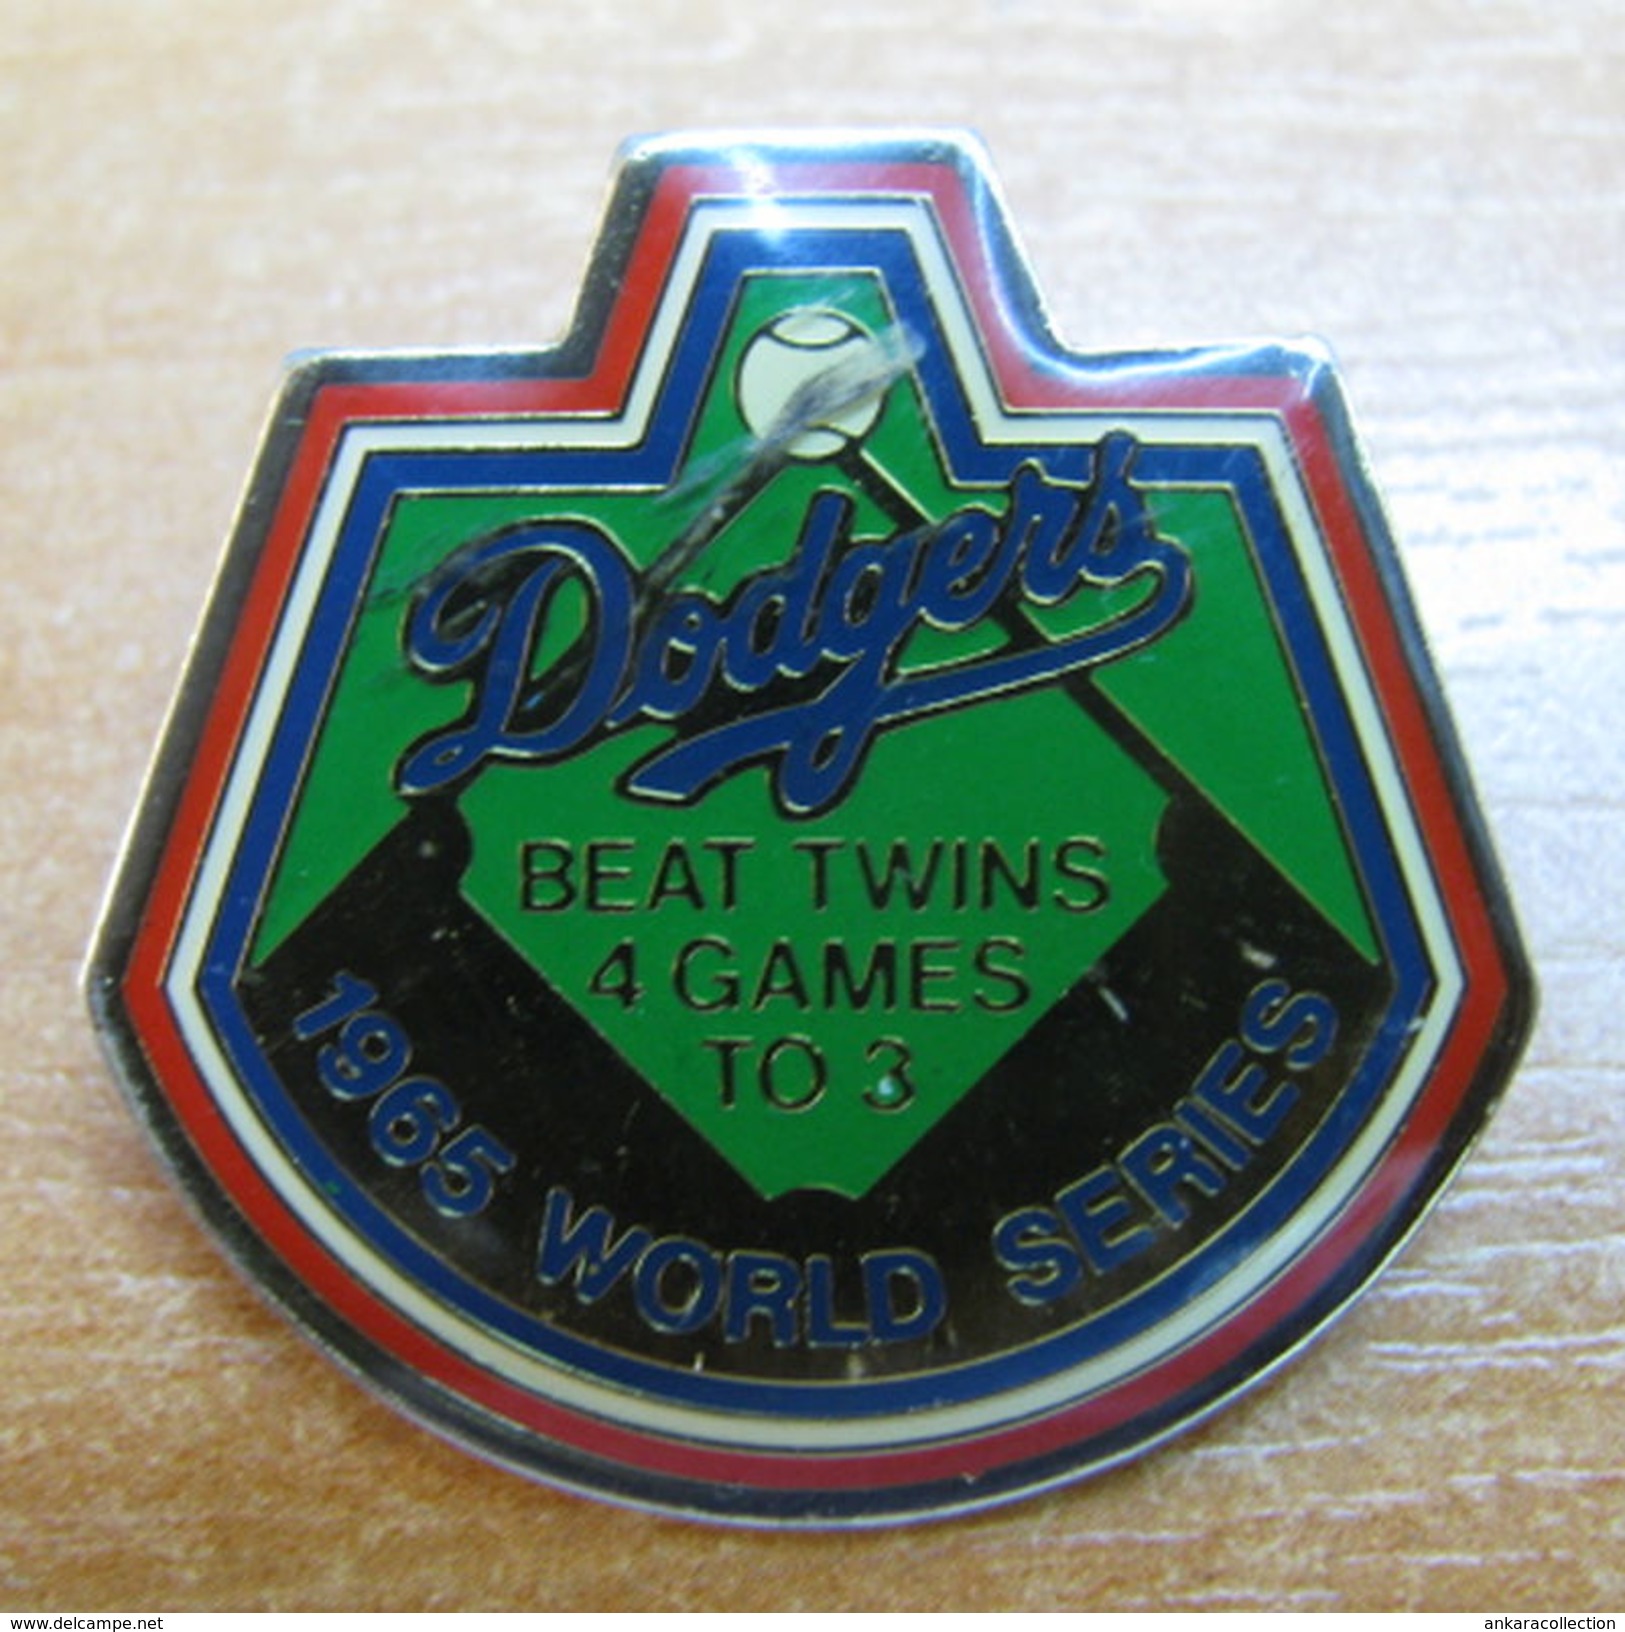 AC - DODGERS 1965 WORLD SERIES BEAT TWINS 4 GAMES TO 3  -L A DODGER  WORLD CHAMPIONSHIPS 1989 BASEBALL BADGES - PIN - Honkbal